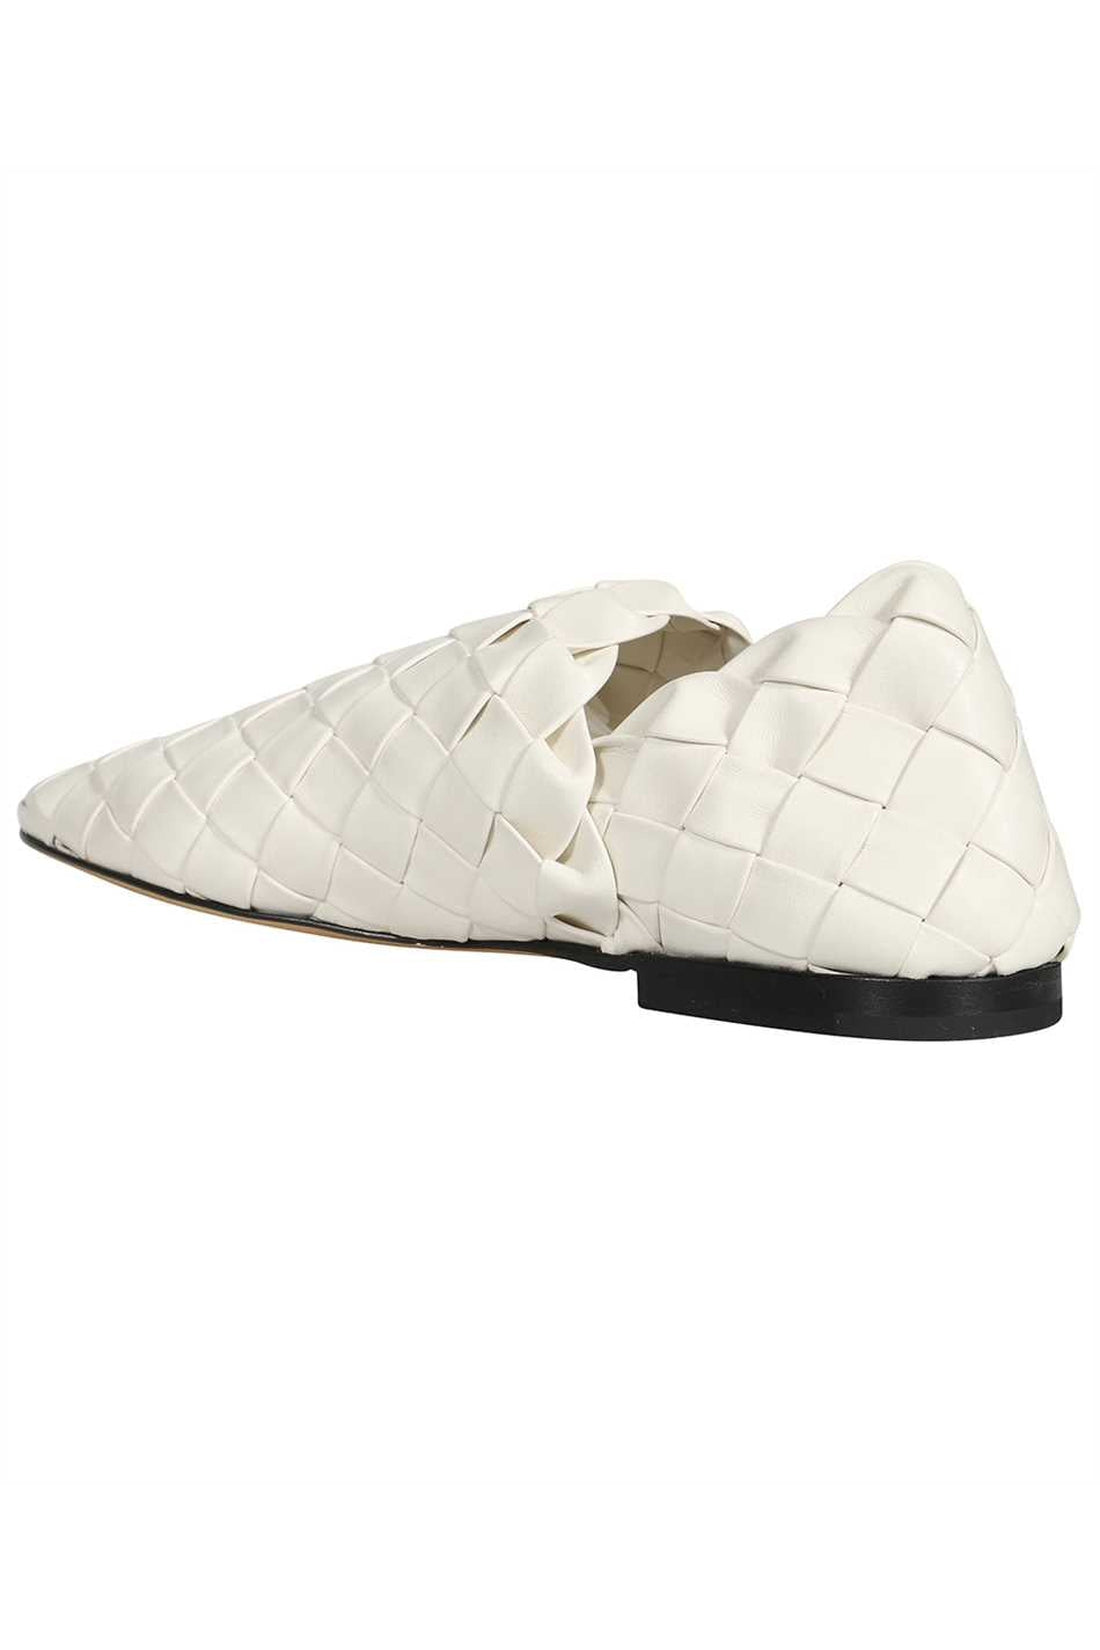 Bottega Veneta-OUTLET-SALE-Leather slippers-ARCHIVIST